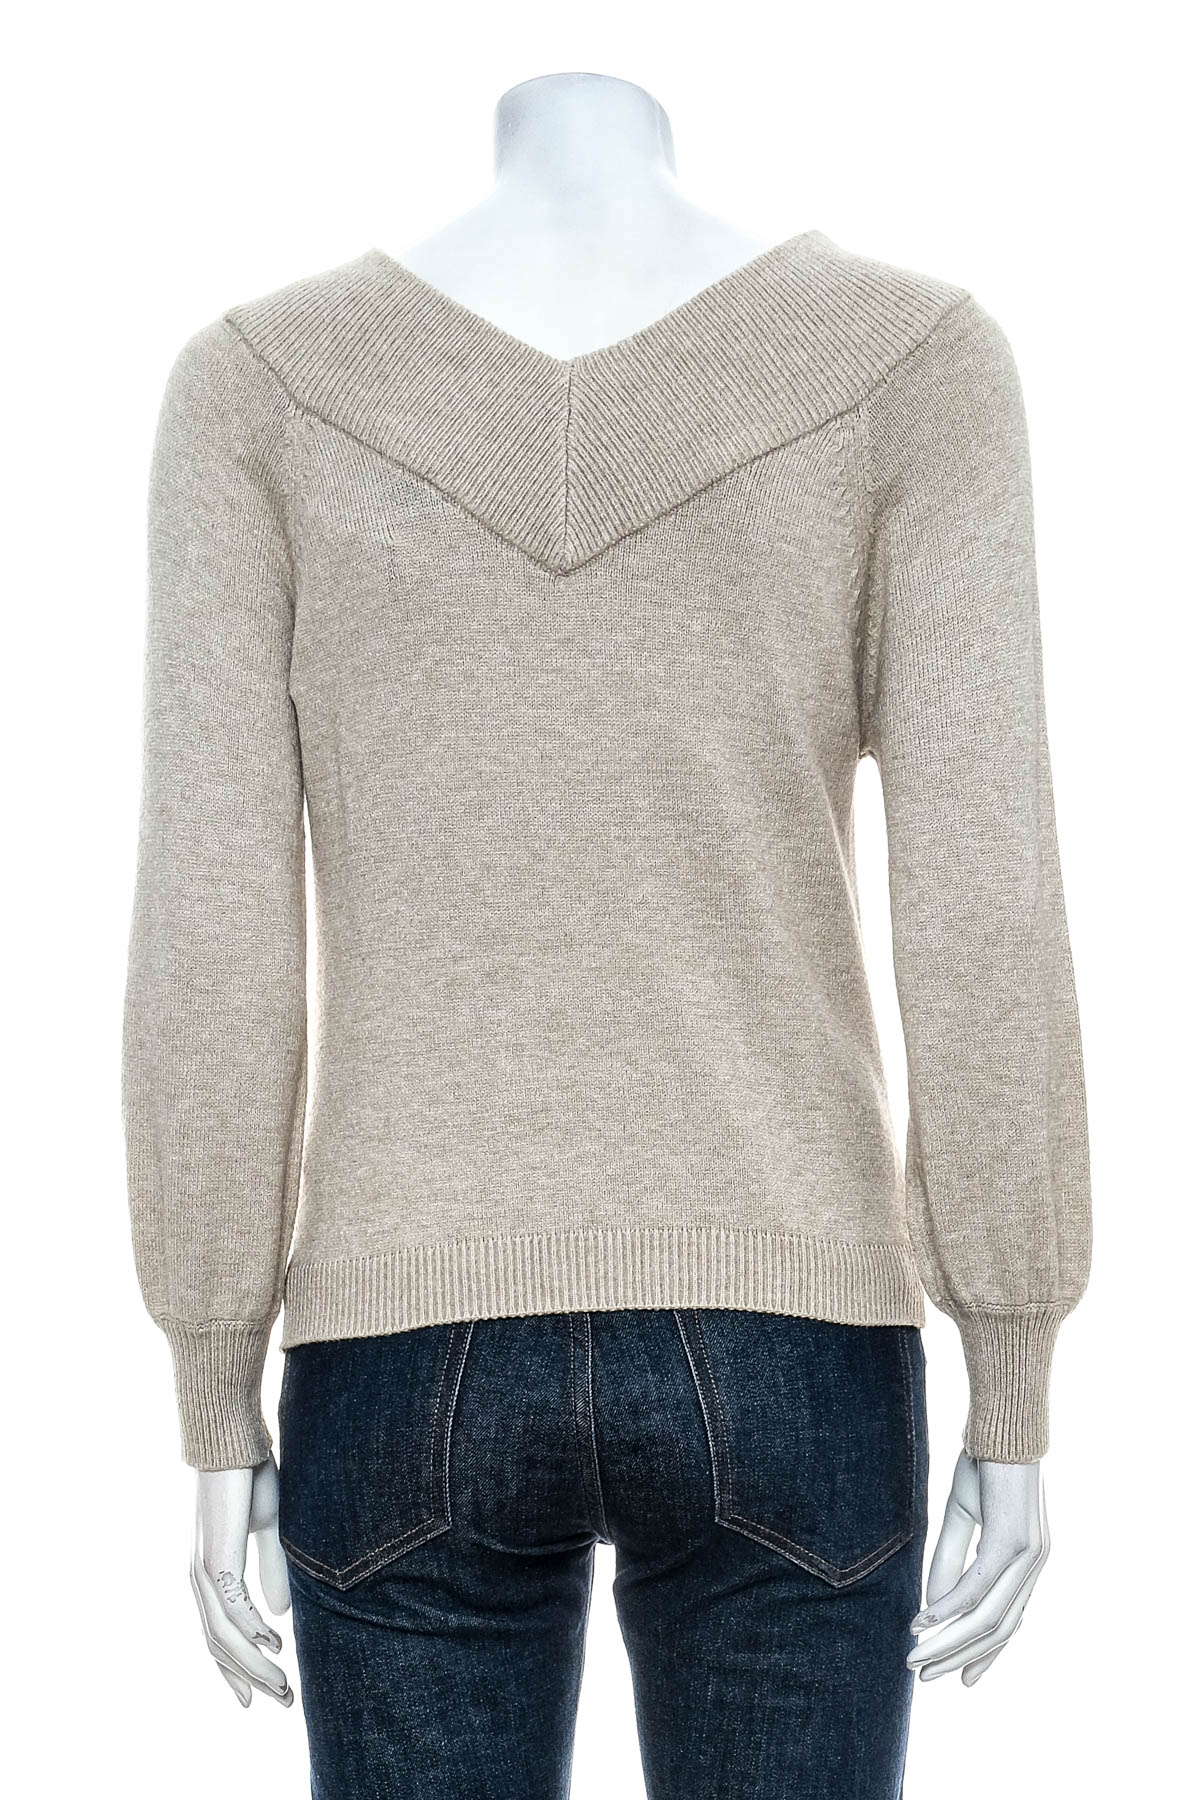 Women's sweater - Jacqueline de Yong - 1